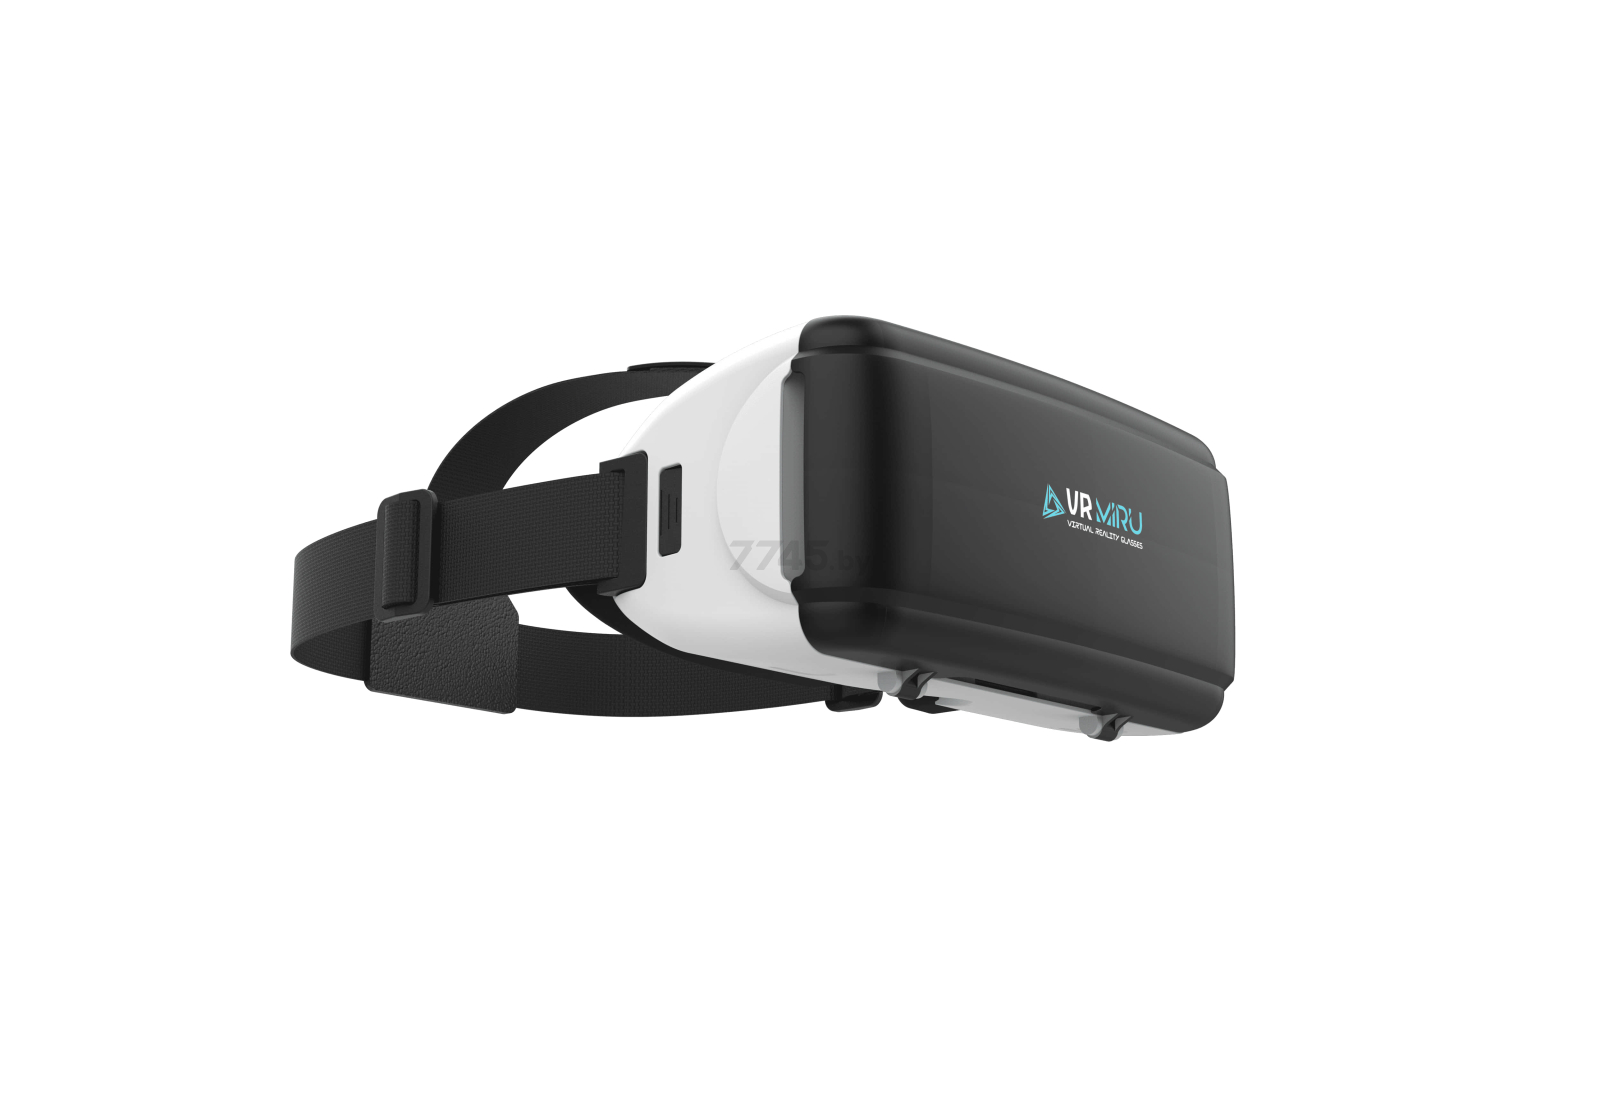 Oчки виртуальной реальности MIRU VMR900 Eagle Touch - Фото 7